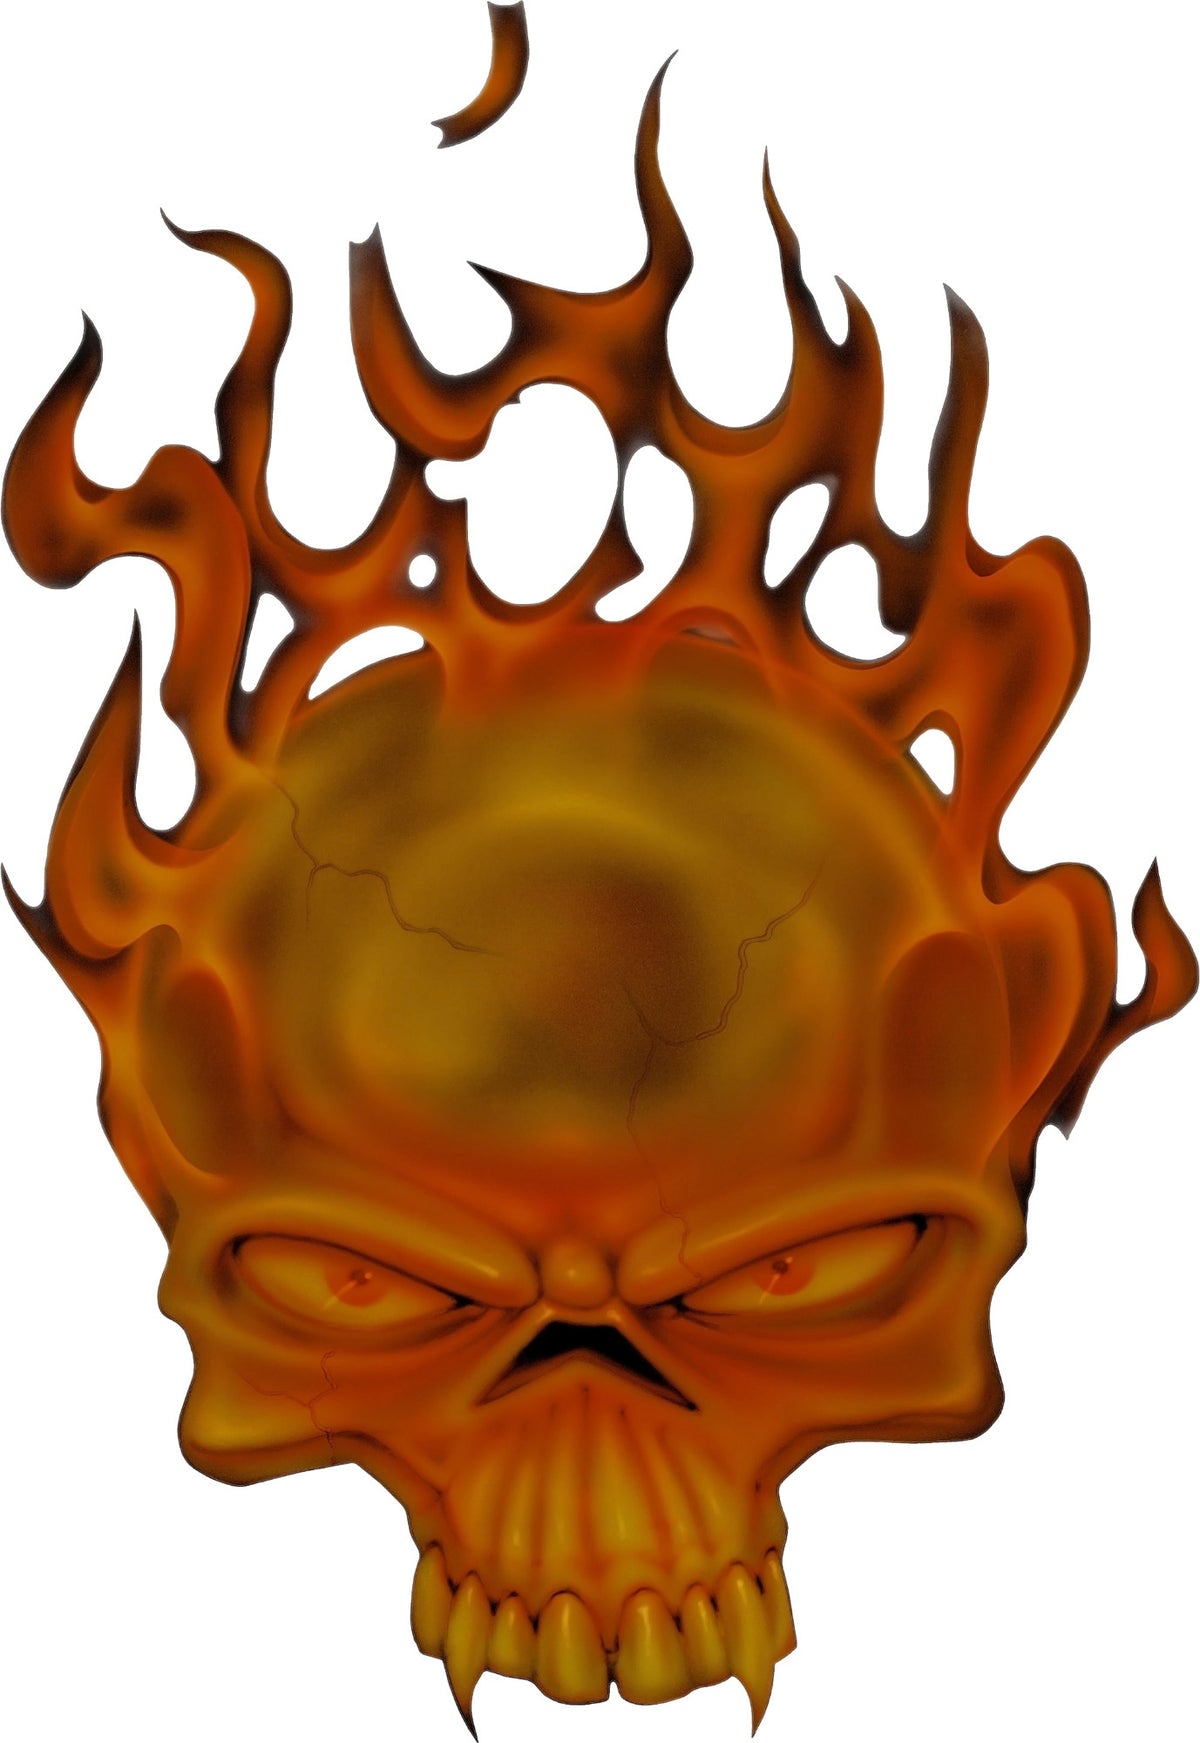 flaming skull decal for car hood